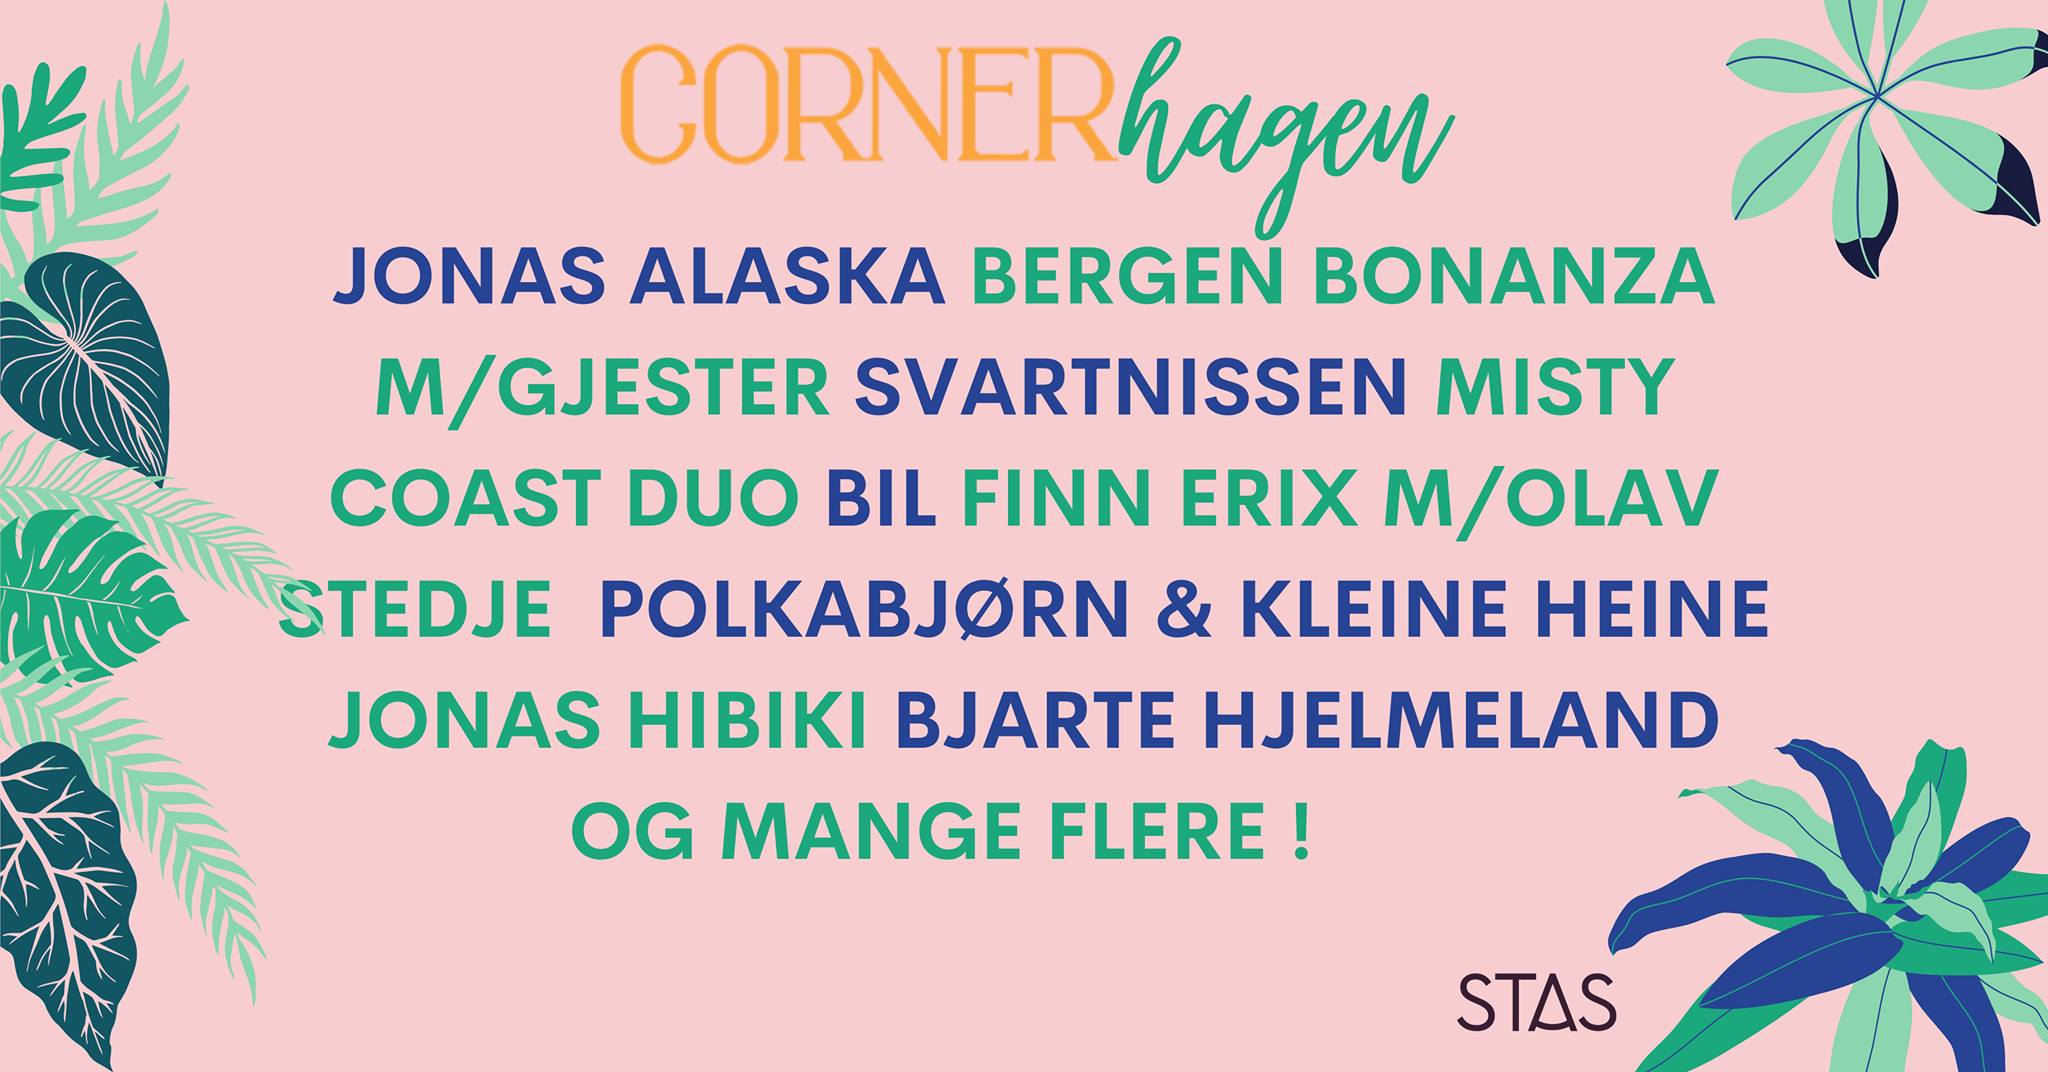 Cornerhagen 2021  - Stas Artist 